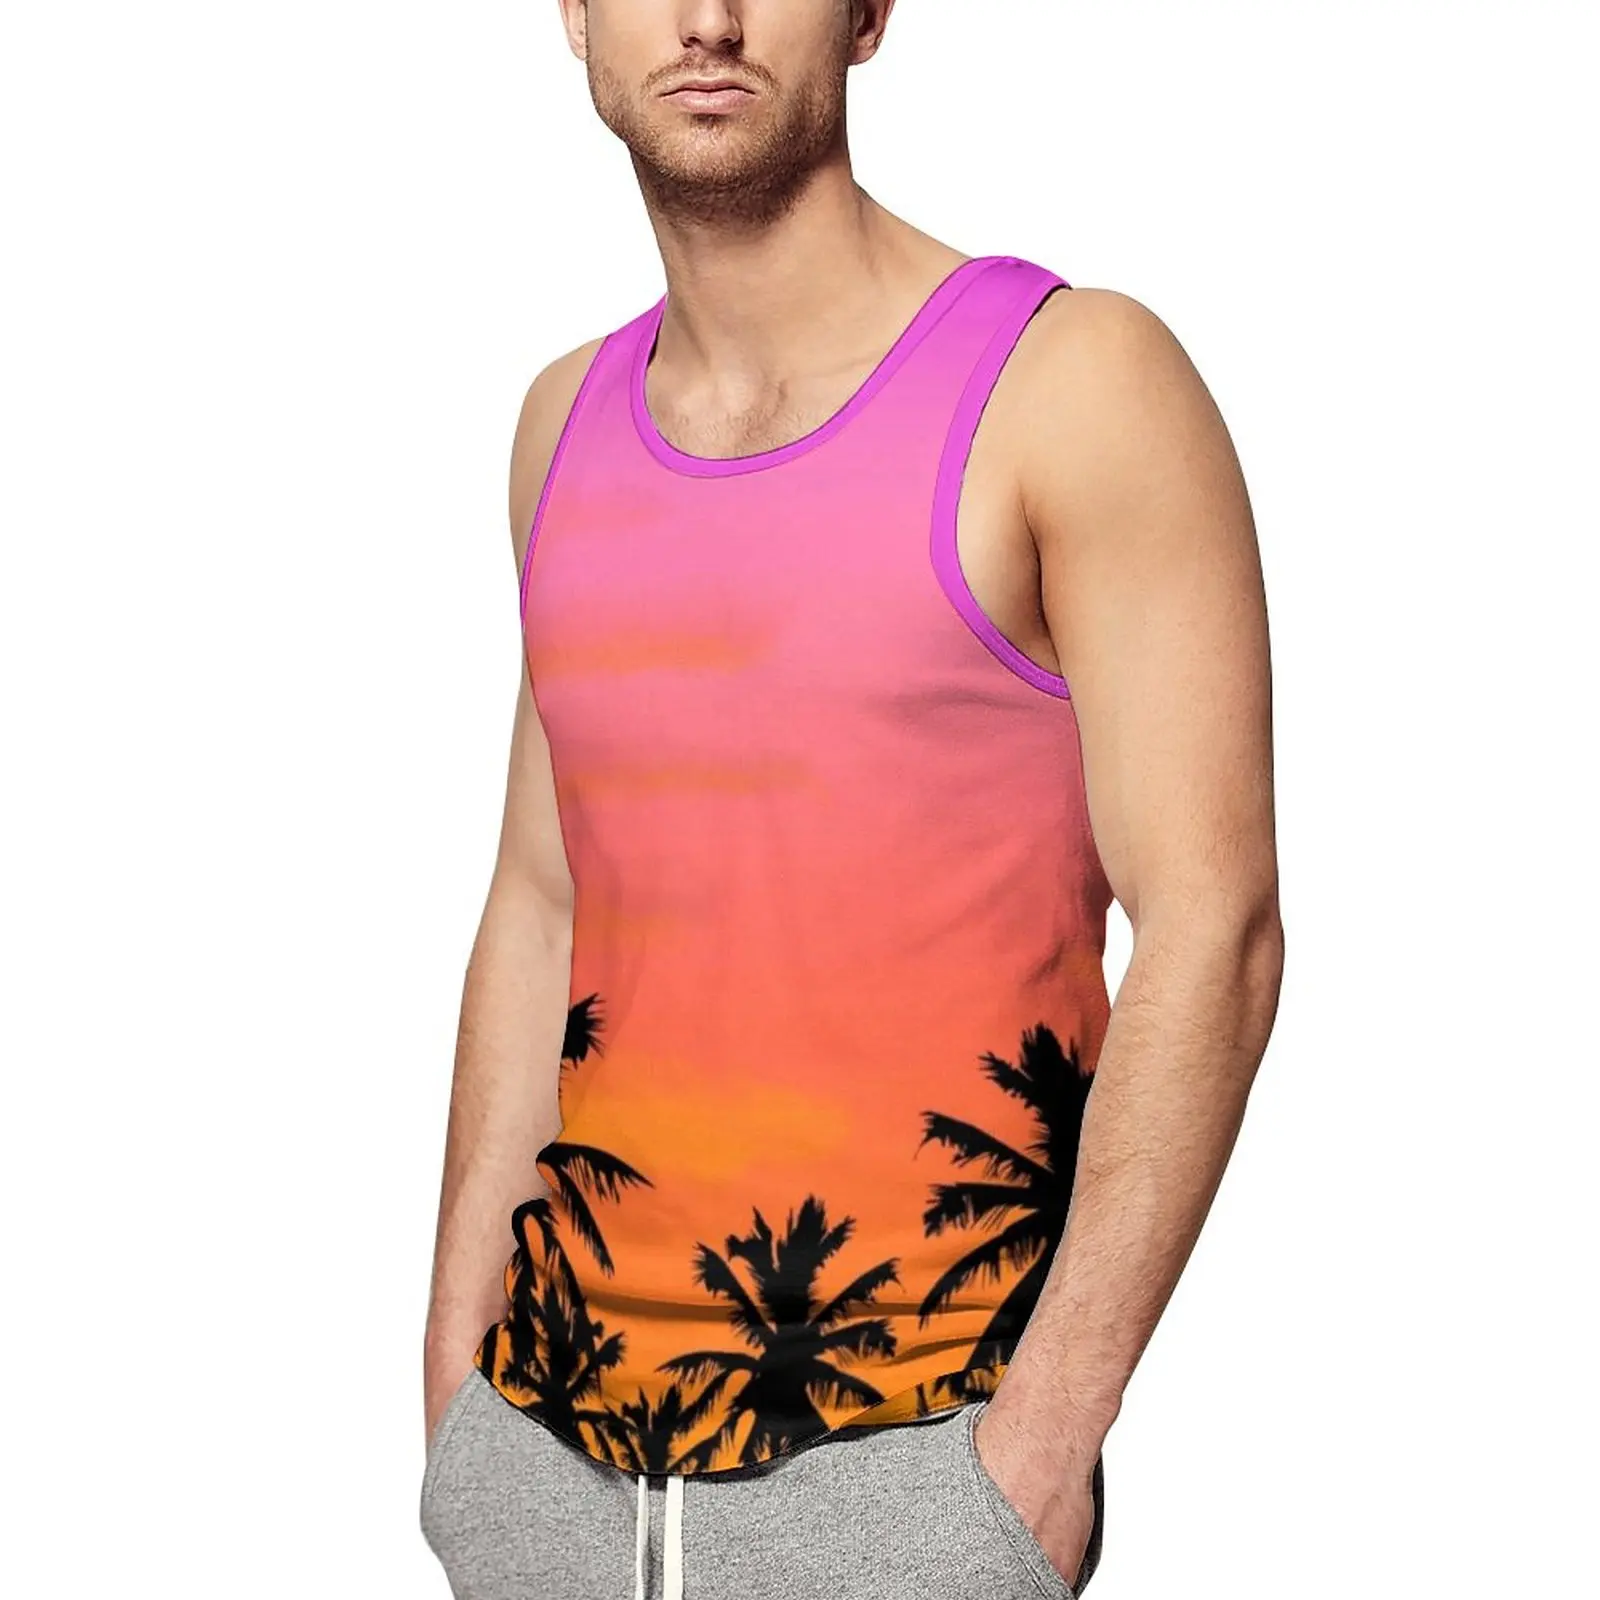 

Island Sunset Summer Tank Top Palm Trees Print Training Tops Males Design Cool Sleeveless Vests 3XL 4XL 5XL